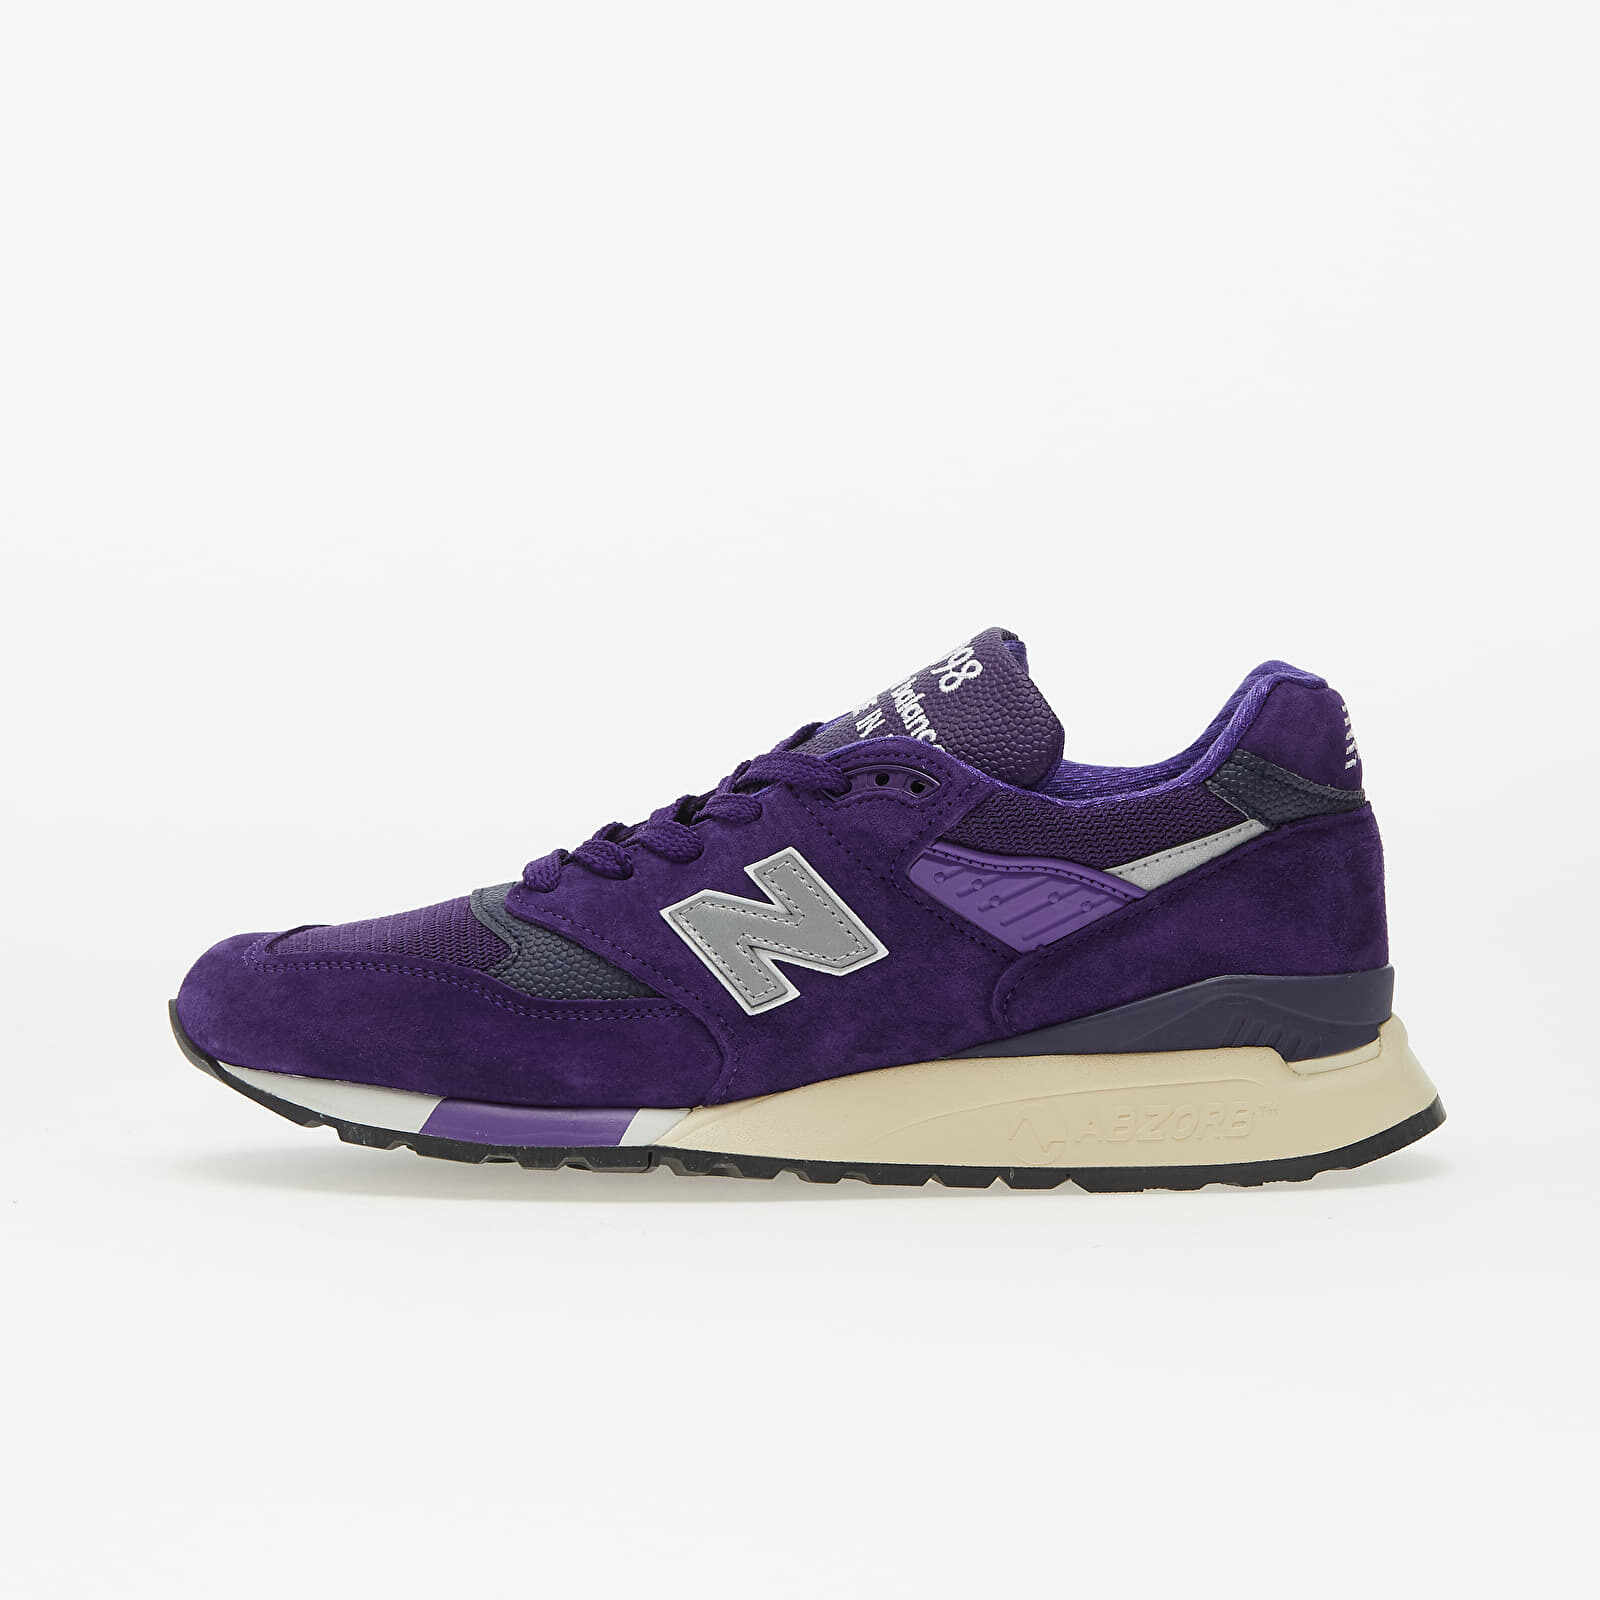 New Balance 998 Made in USA Purple